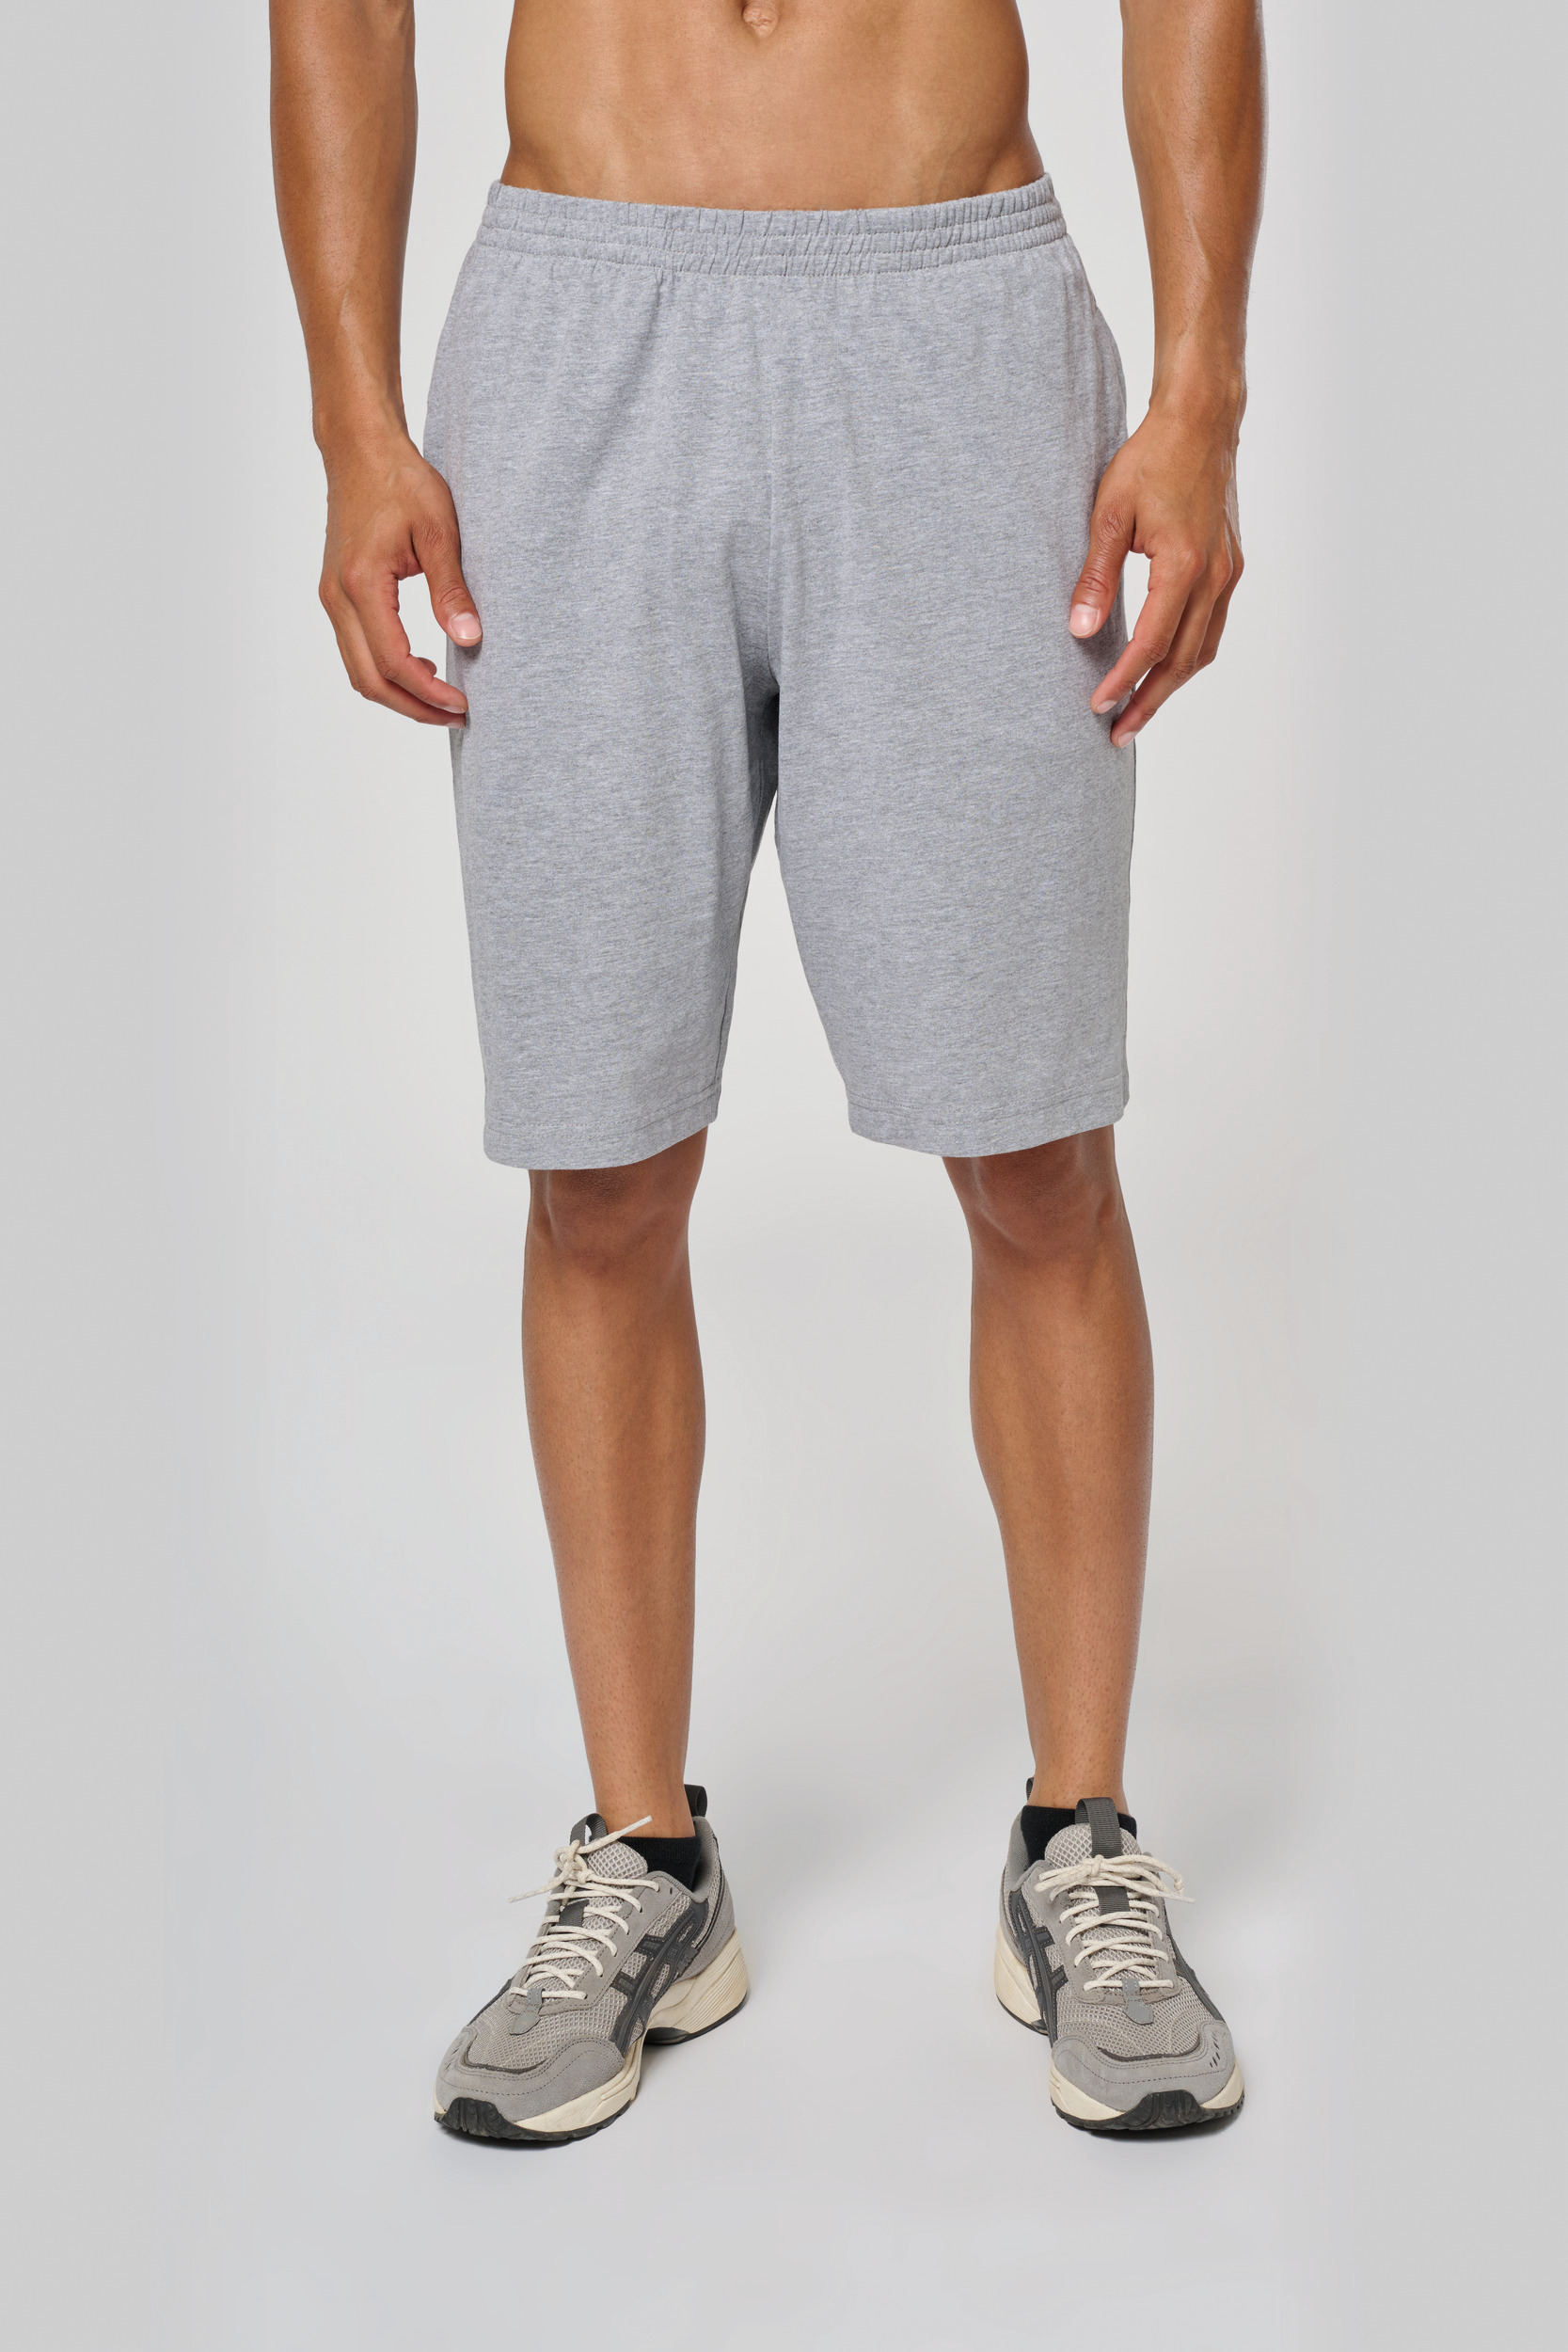 PA151 - Shorts jersey deportivo hombre